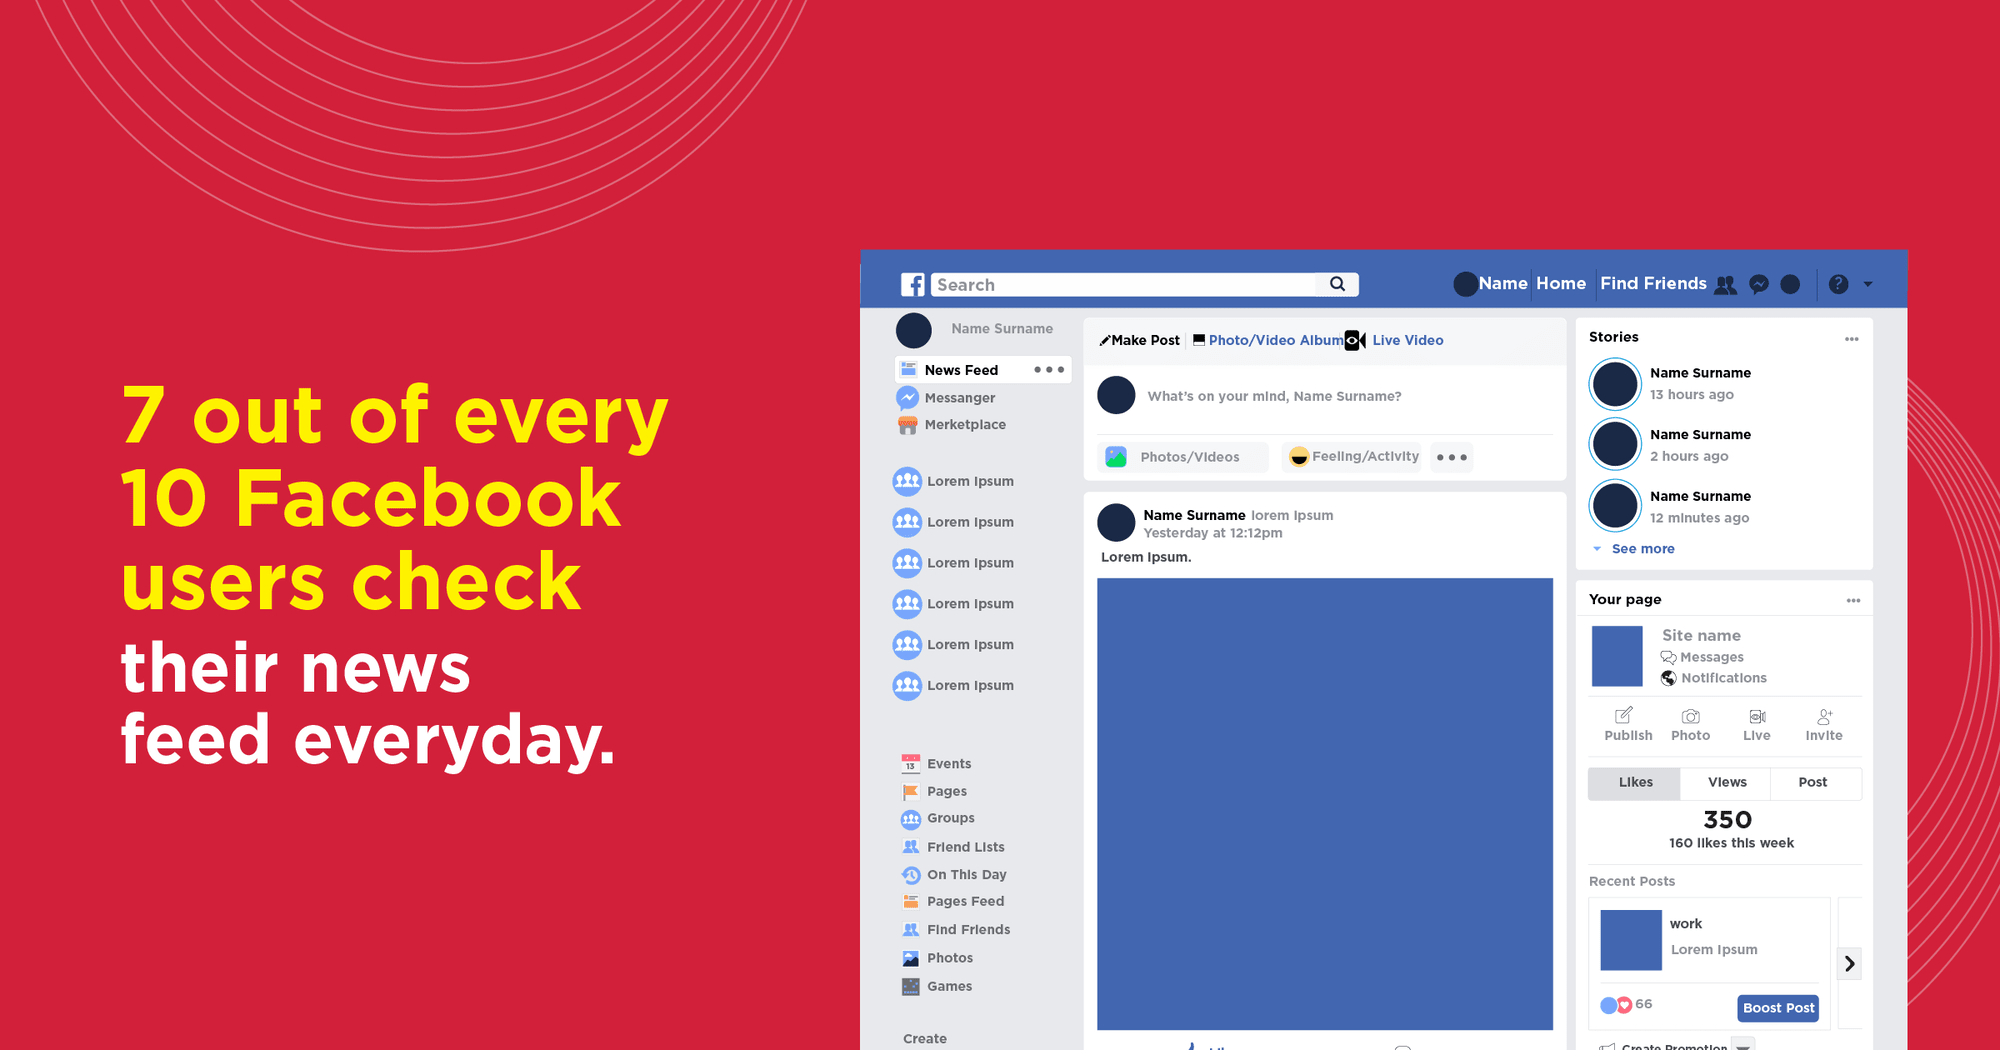 Facebook Business Page Setup